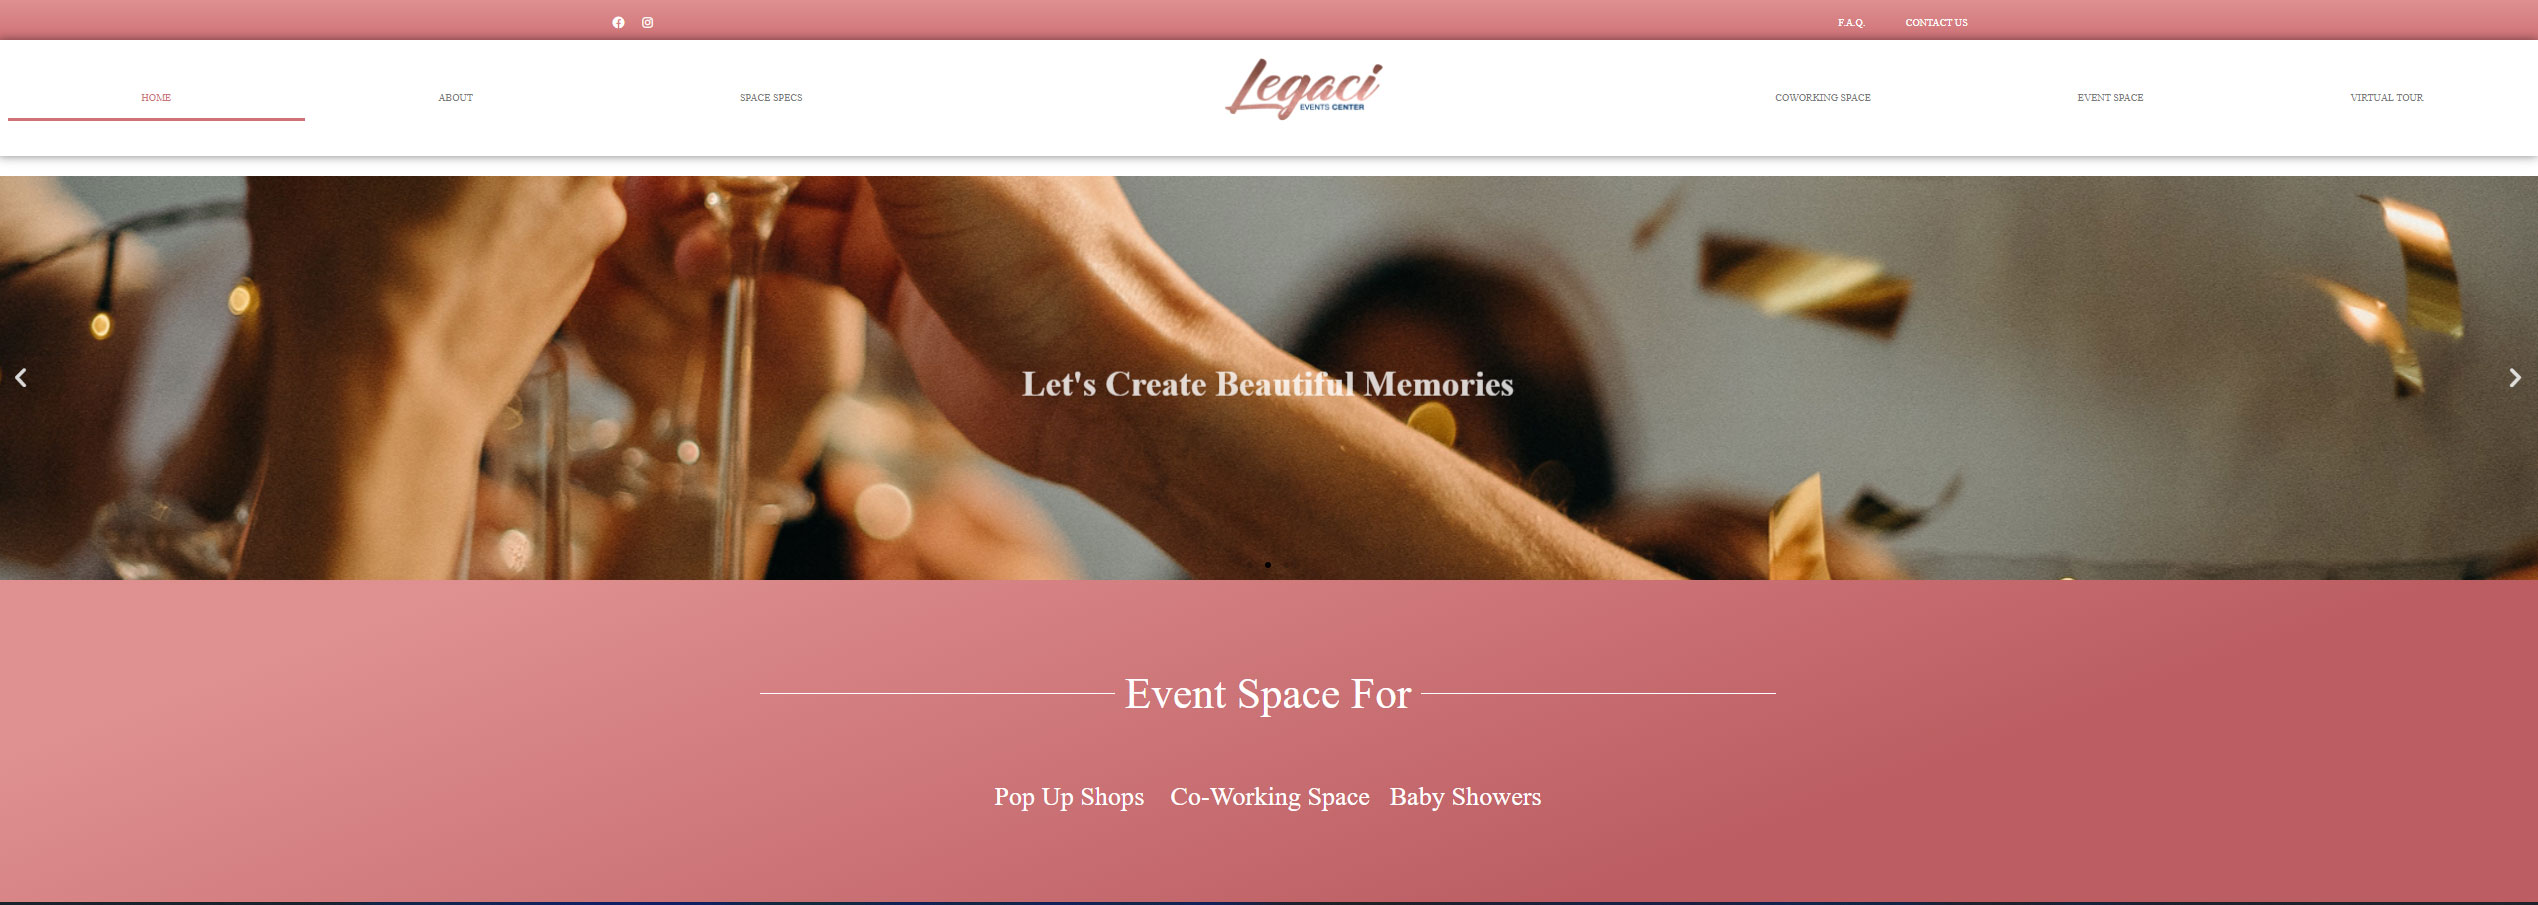 legaci events center website